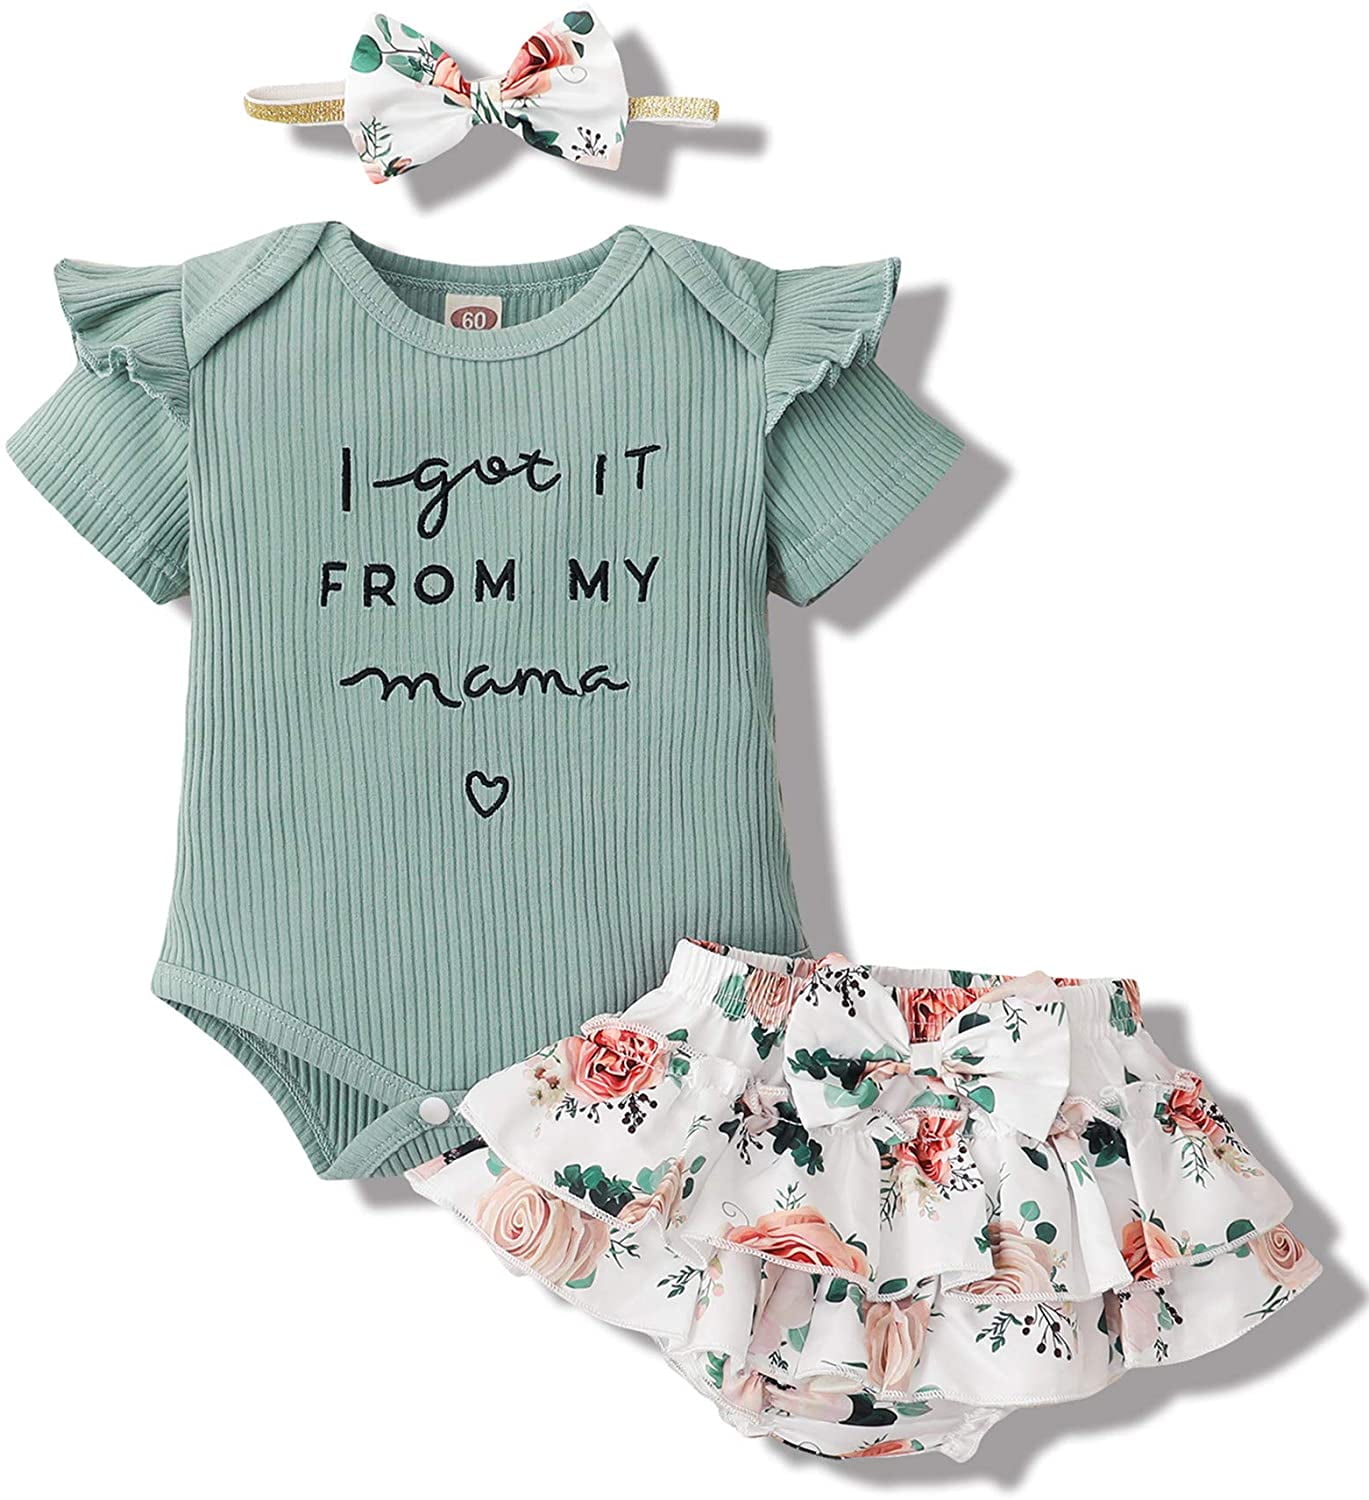 HESHENG Newborn Infant Baby Girl Short Sleeve Clothes Letter Romper Top ...